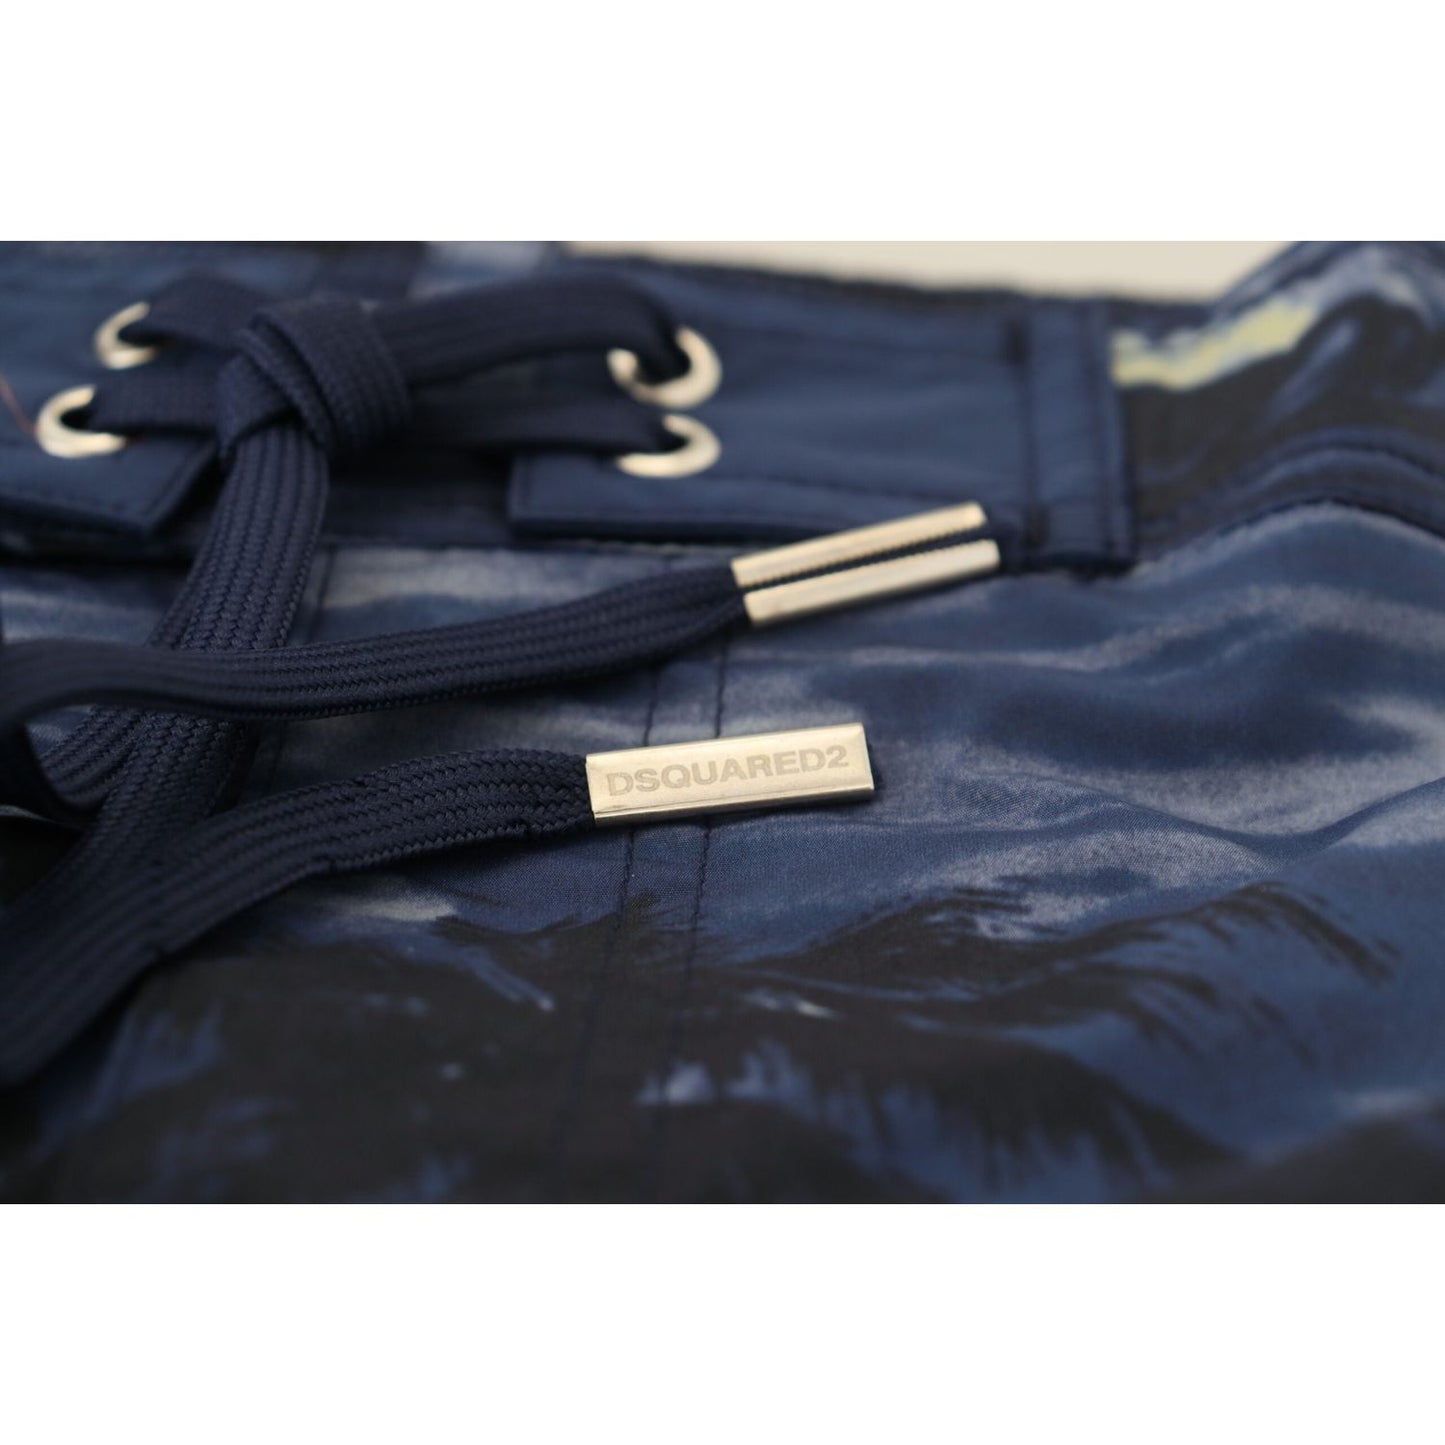 Dsquared² Tropical Wave Design Swim Shorts blue-tropical-wave-design-beachwear-shorts-swimwear